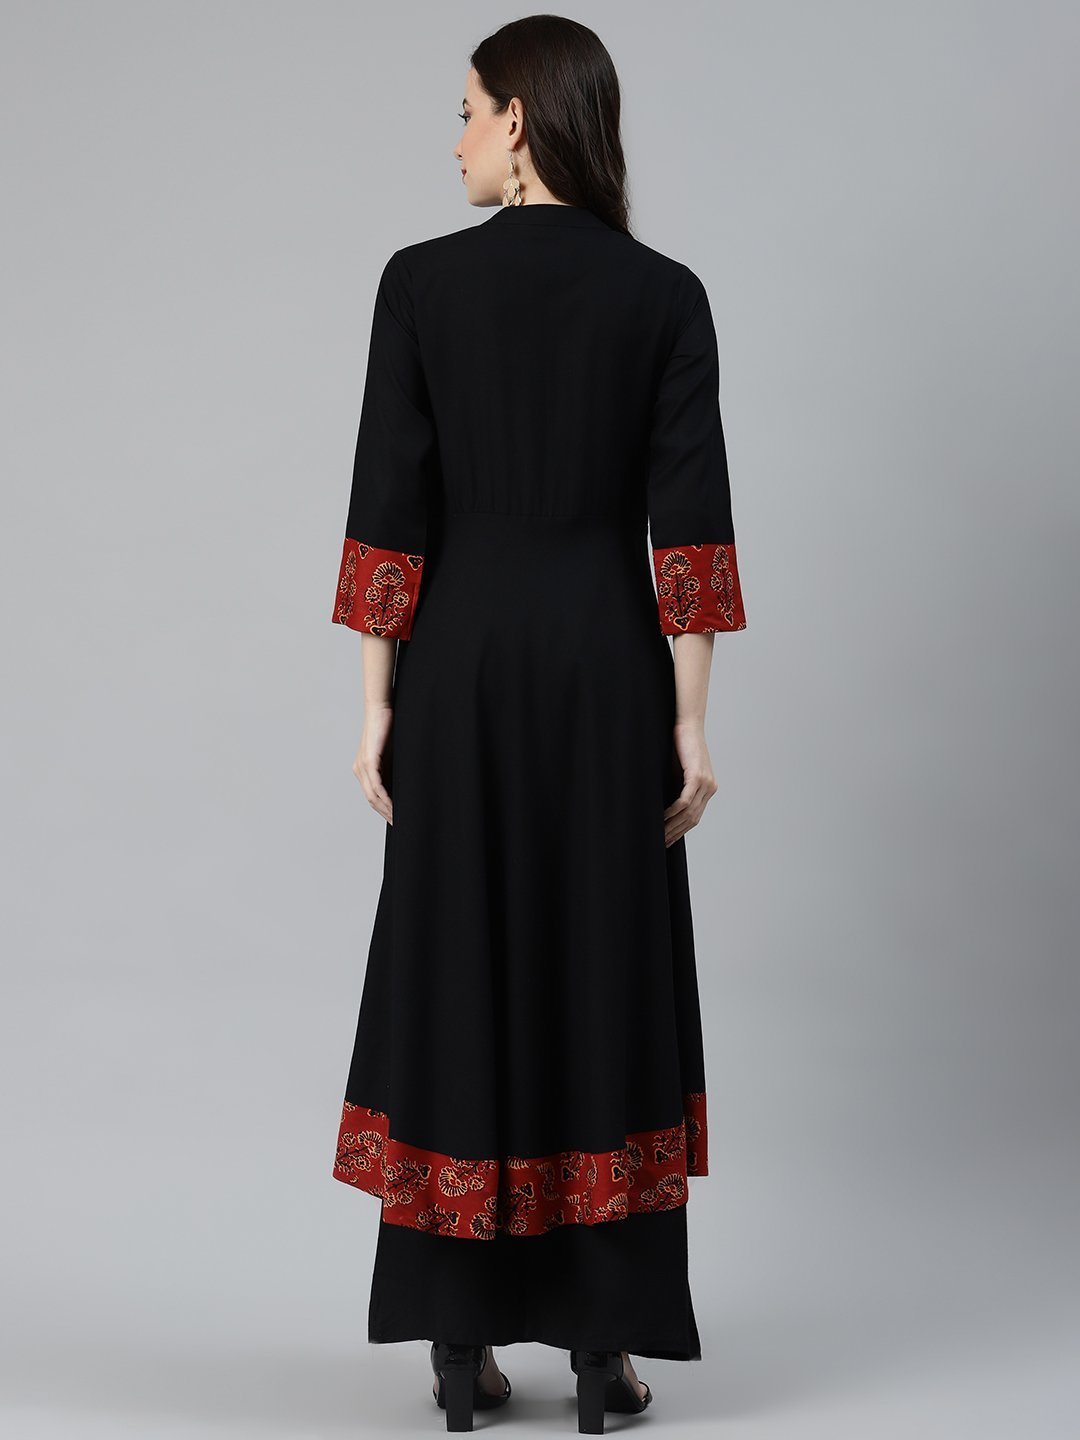 Women's Black & Red Printed Yoke Design Anarkali Kurta - Jompers